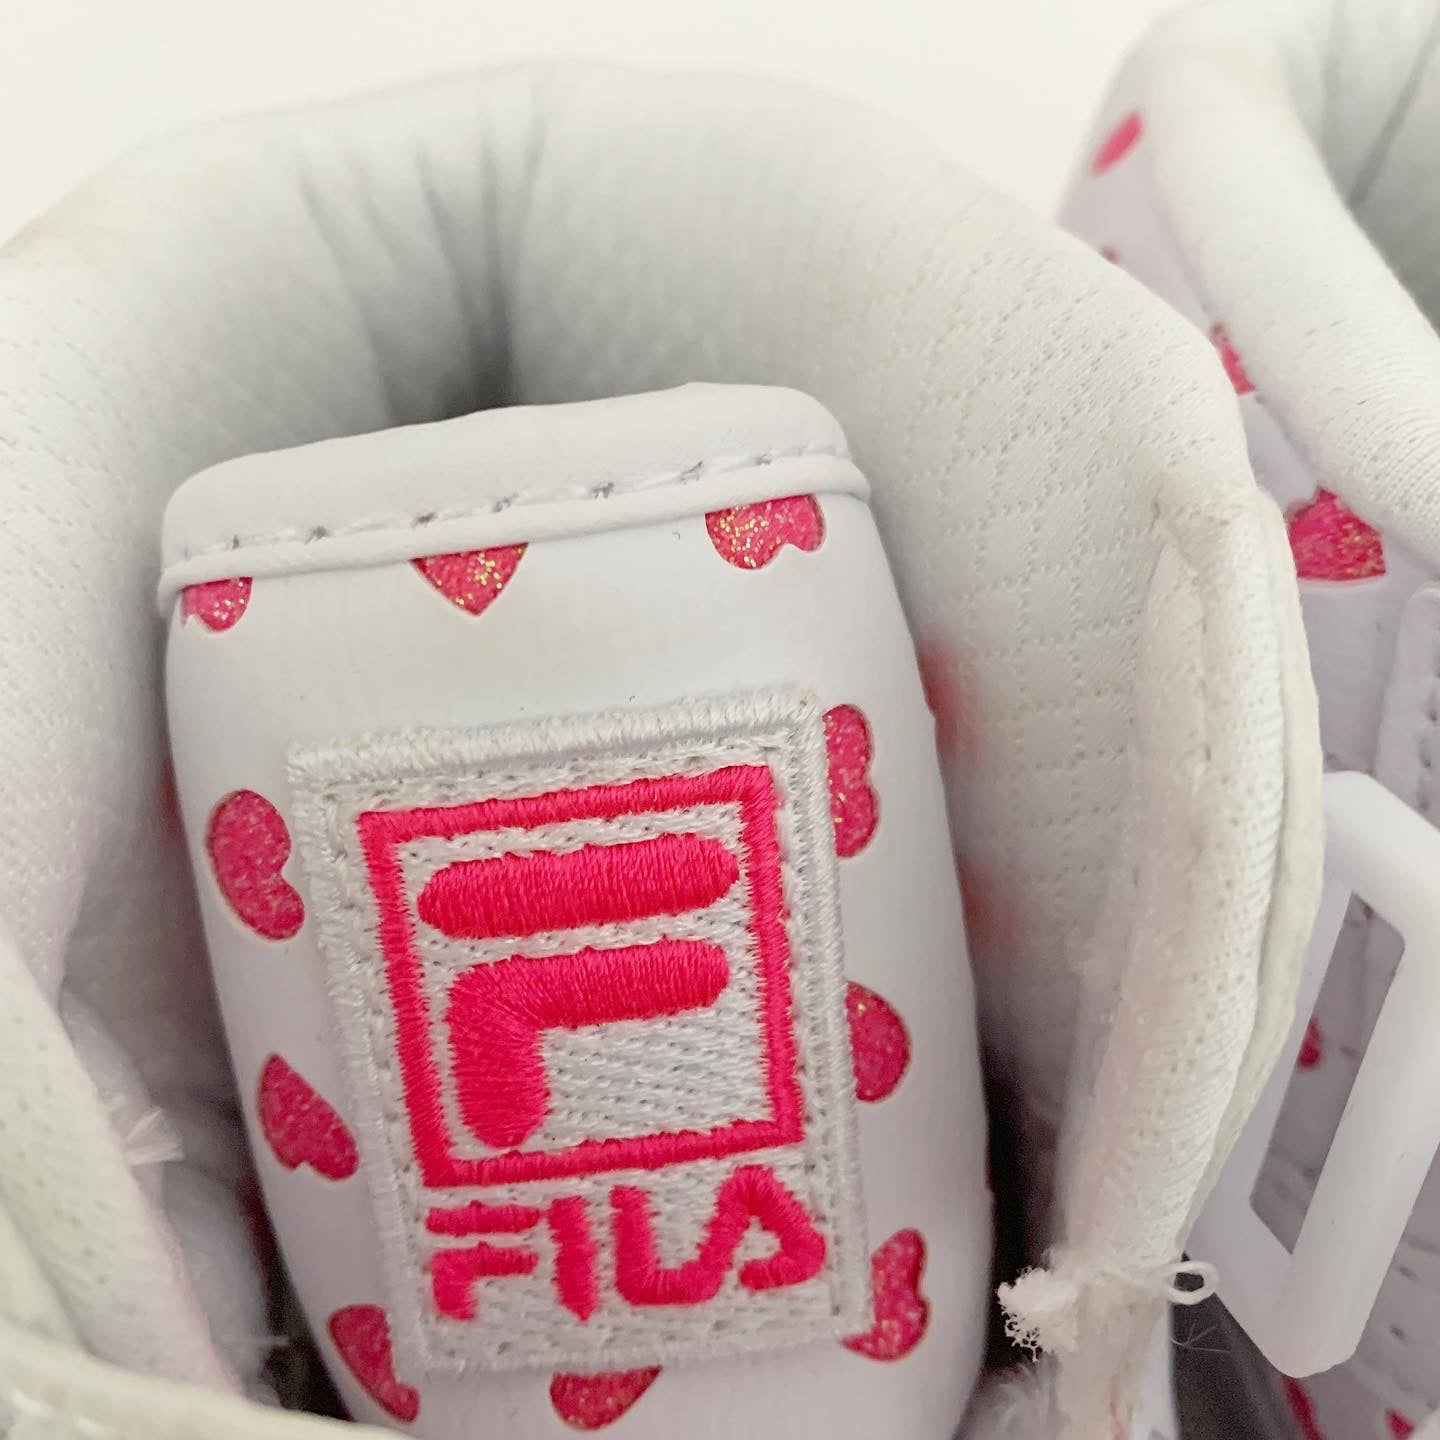 Fila Vulc 13 Heart High Top Sneaker Women's  Pink White Size 8.5